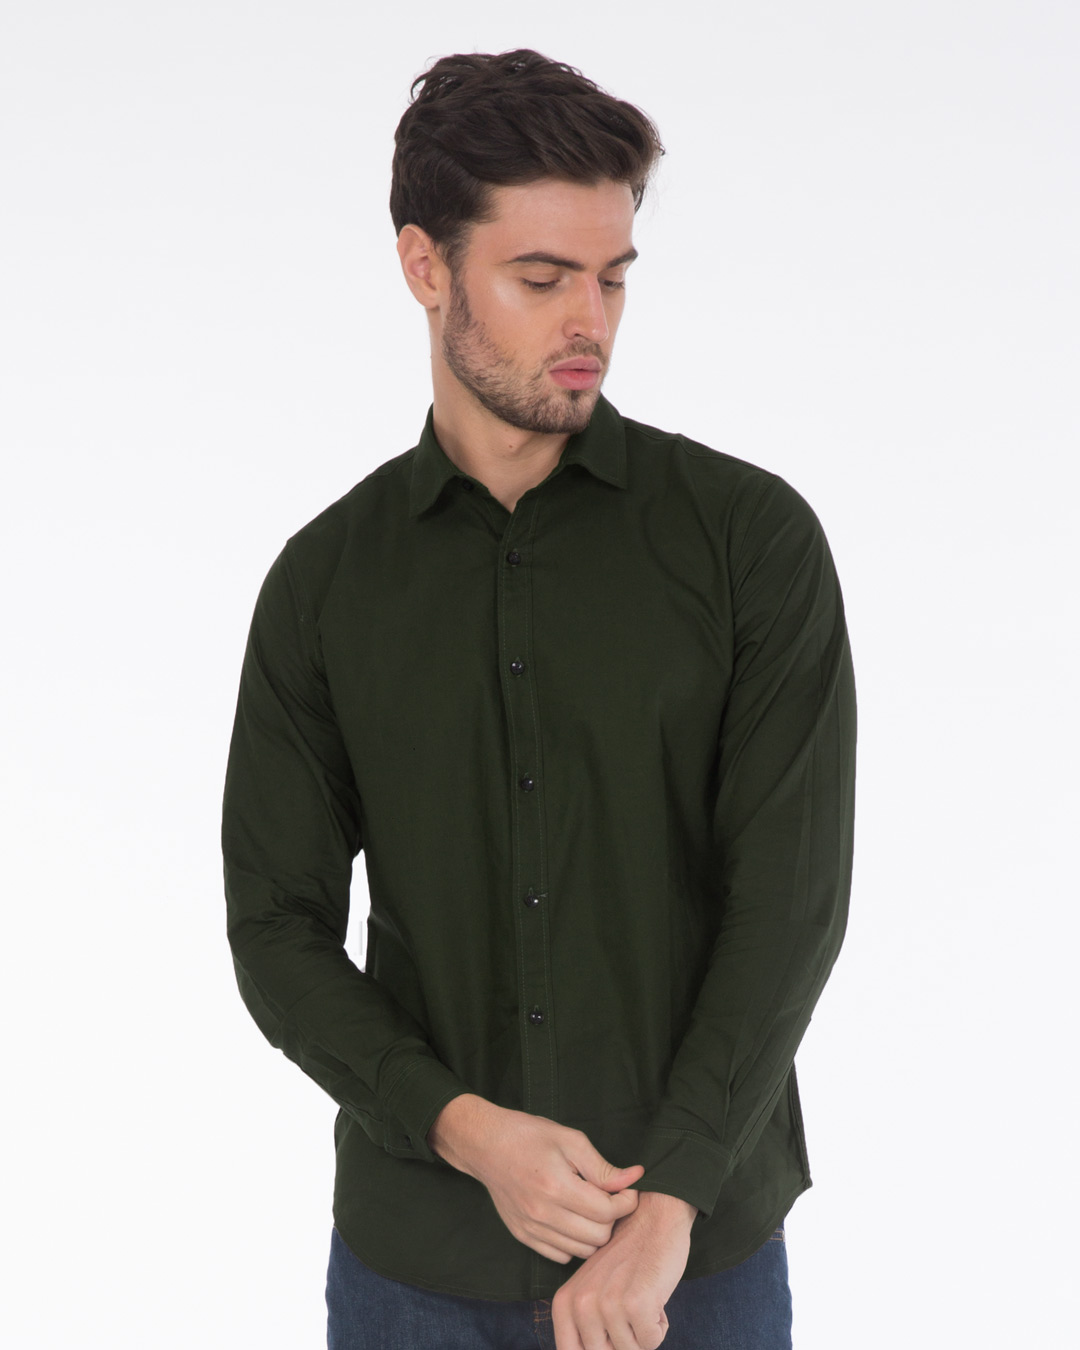 Dark Olive Green Slim Fit Shirt Men S Solid Shirts 1504348499 